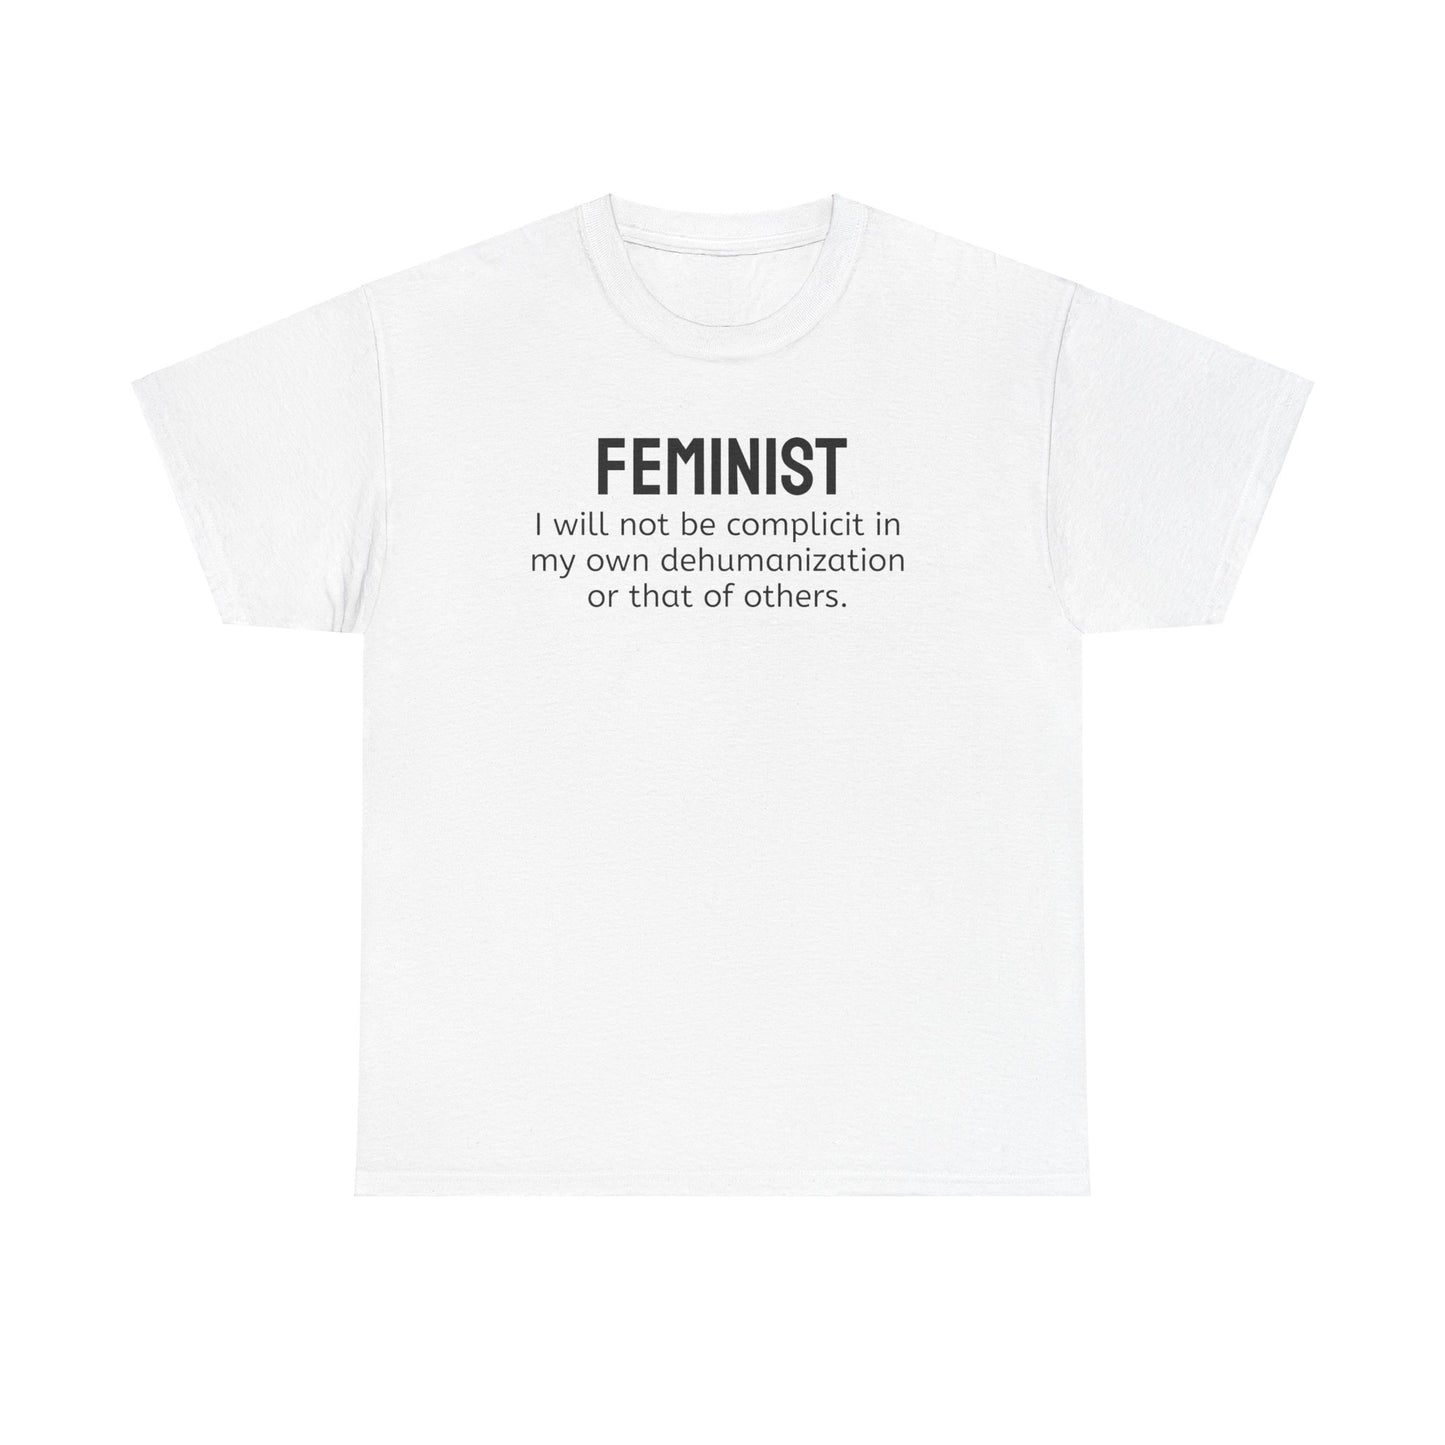 FEMINIST cotton t-shirt